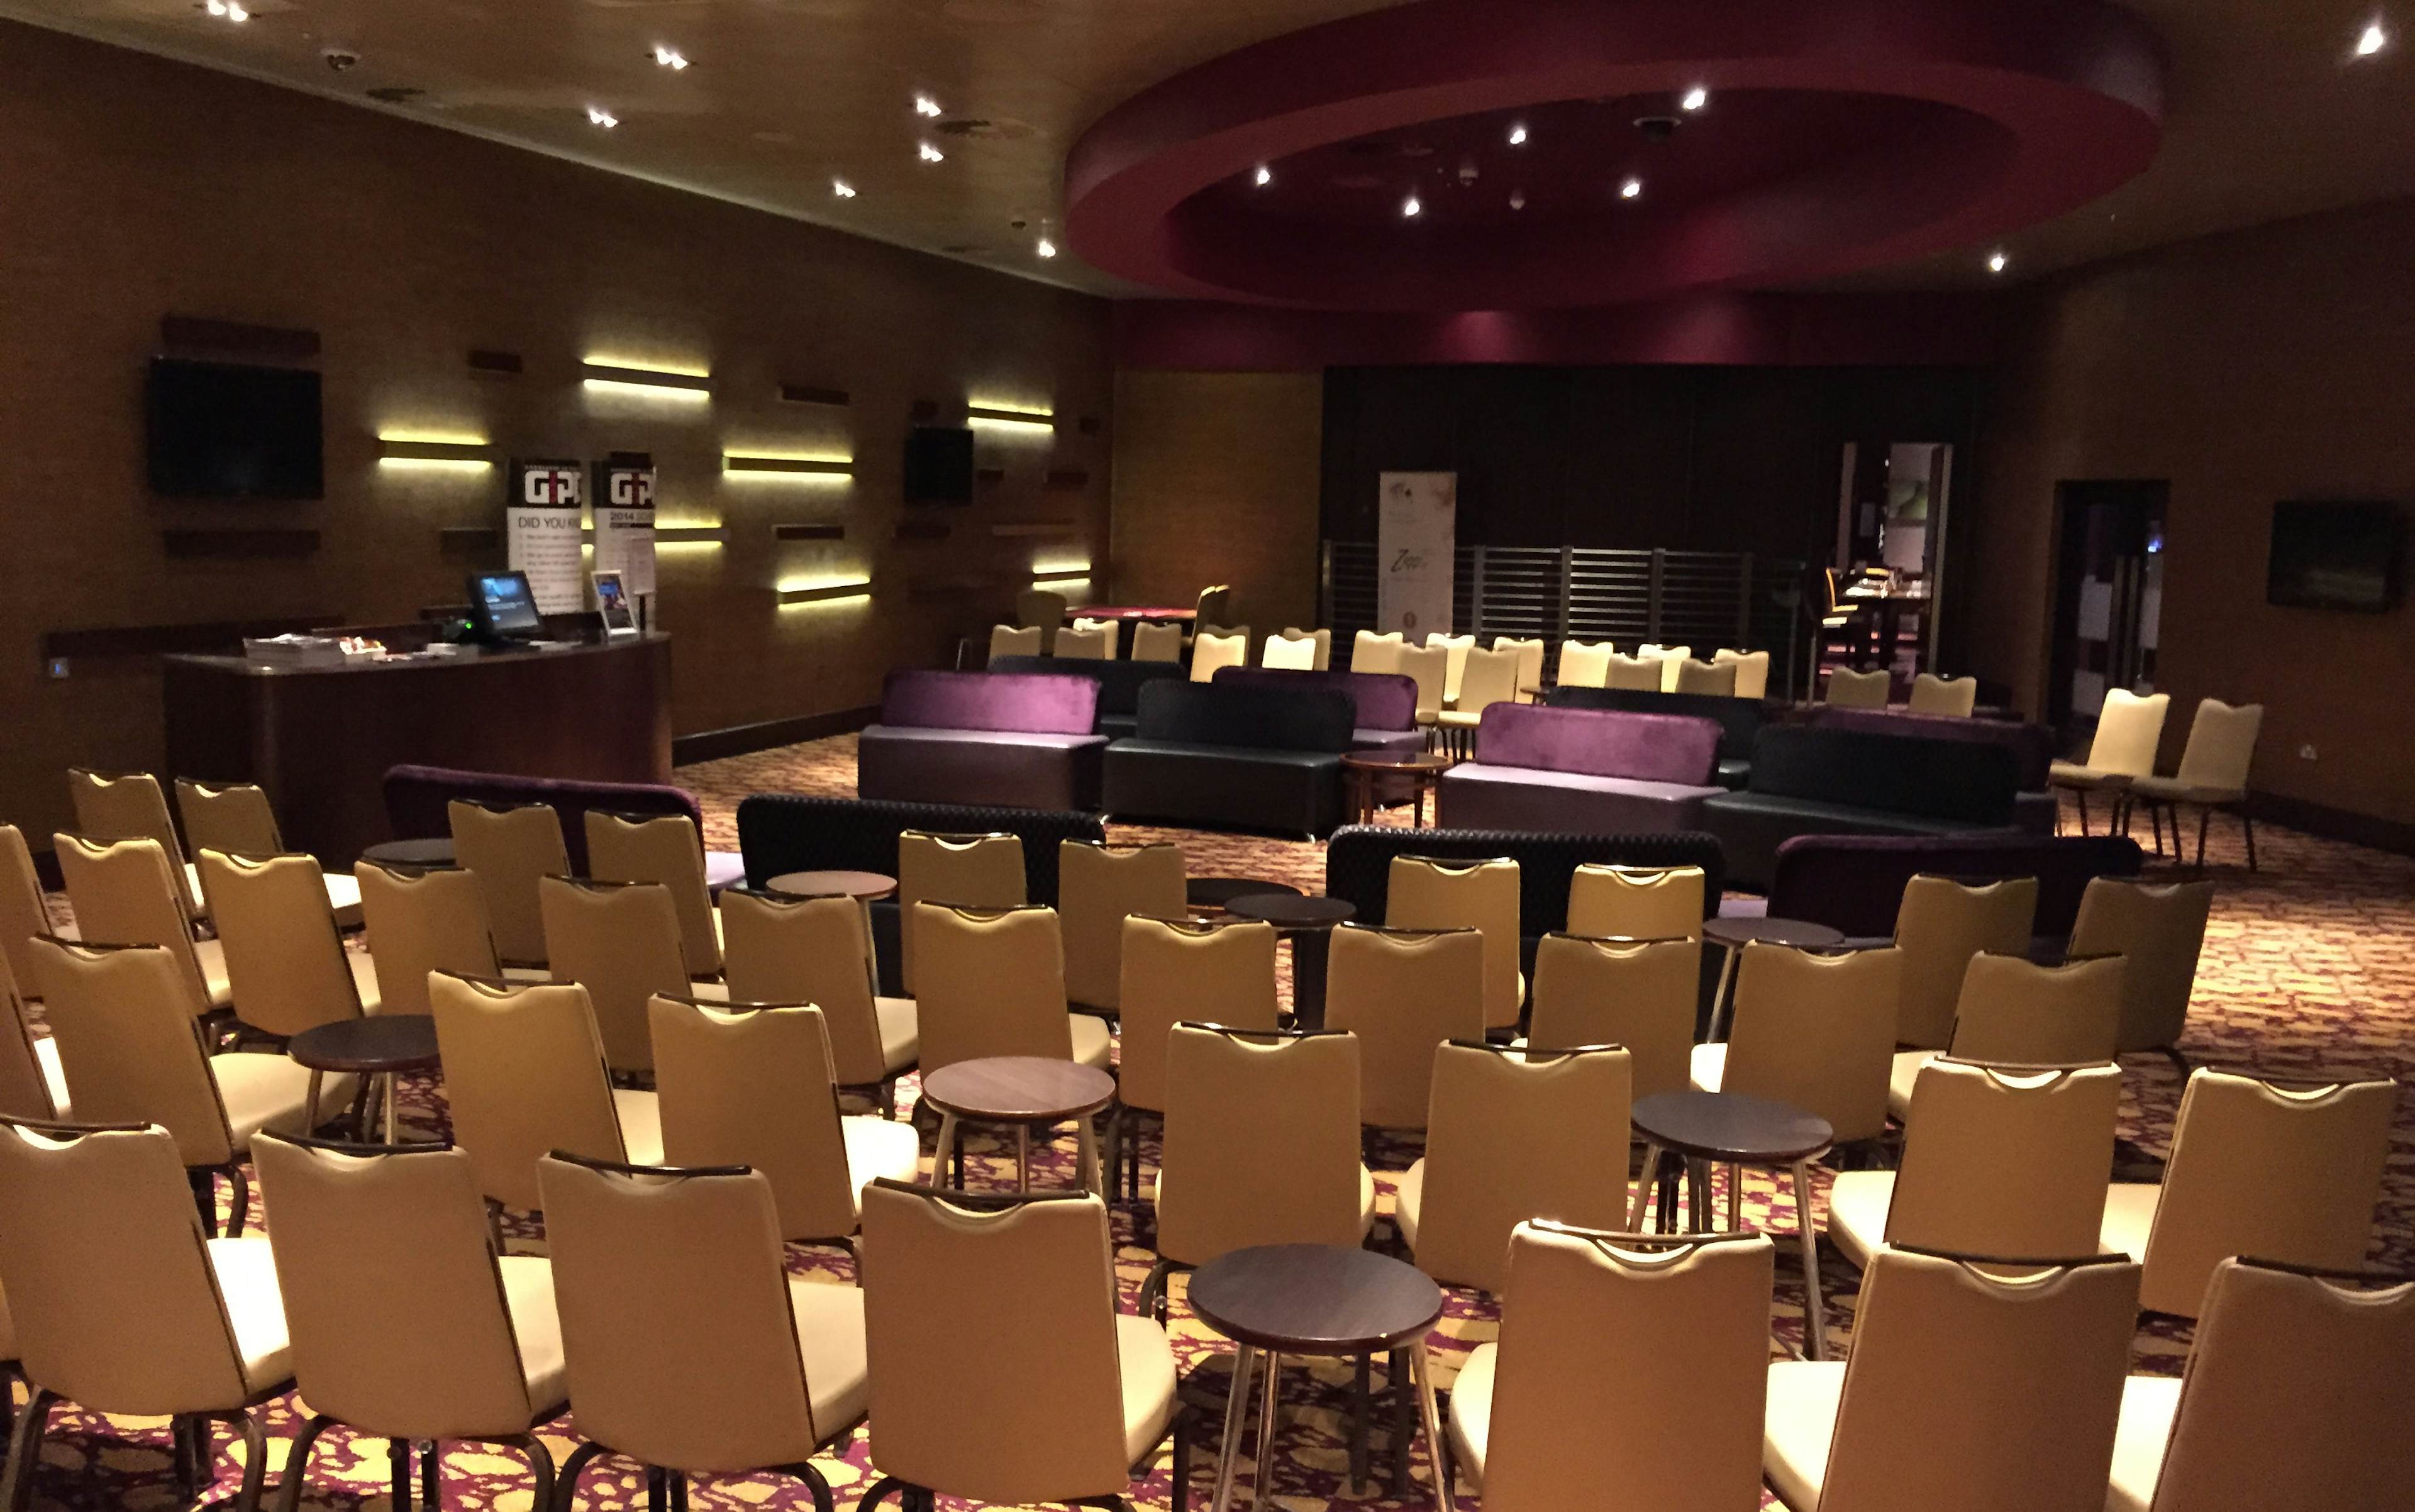 Grosvenor  Casino Didsbury  - Poker Room  image 1